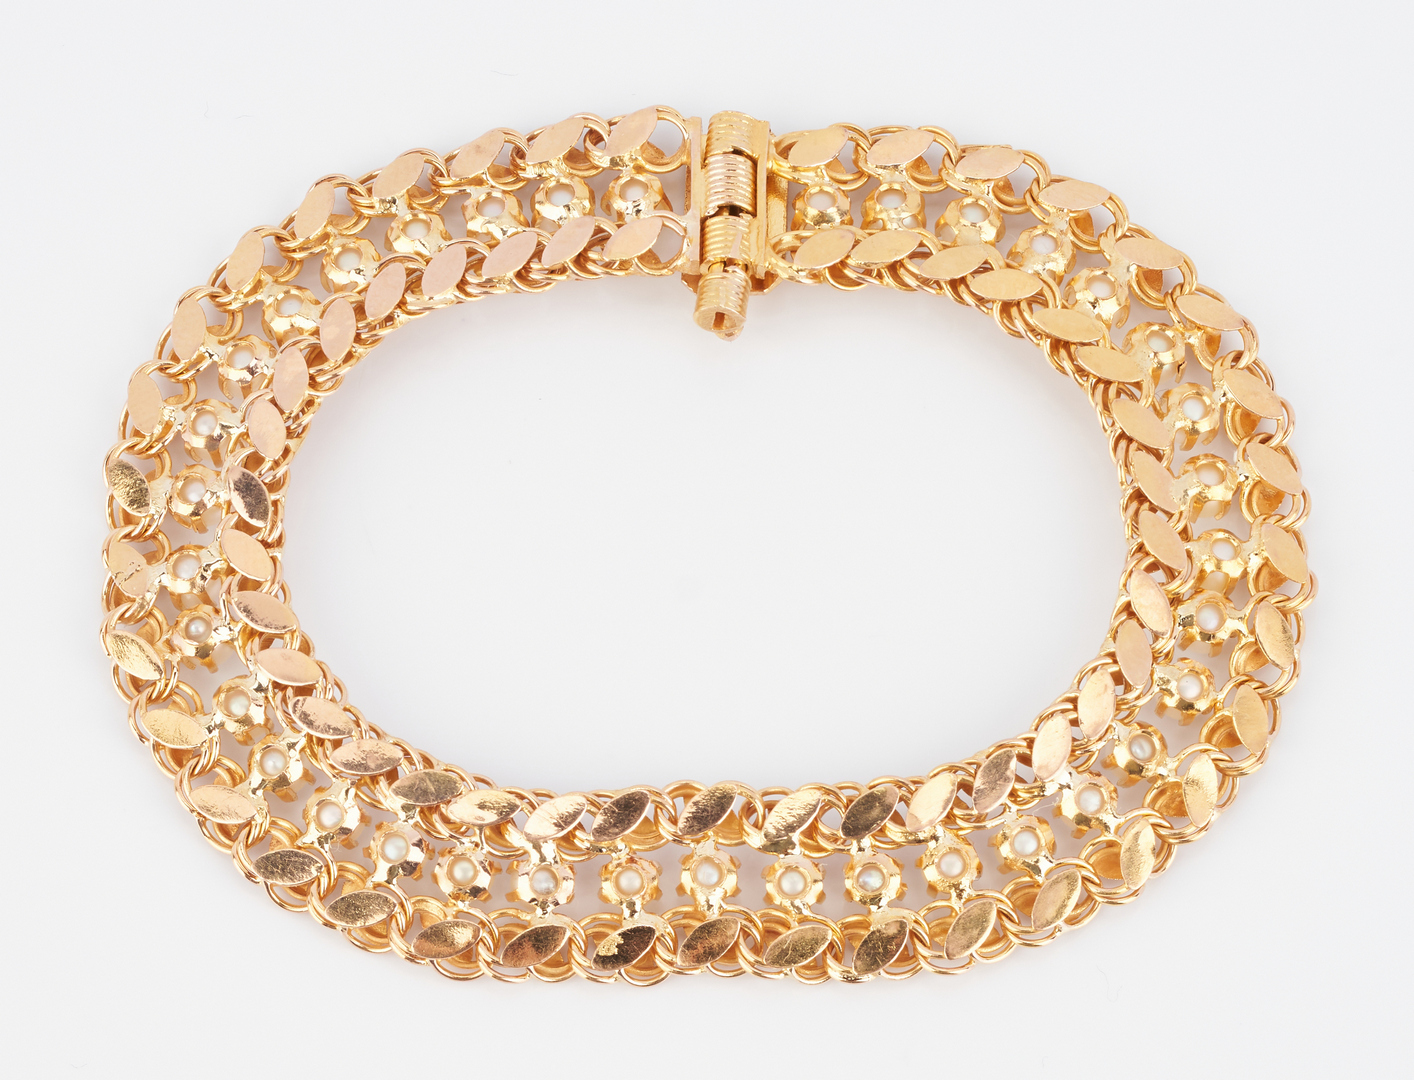 Lot 854: 3 Ladies Pearl & Gold Jewelry Items